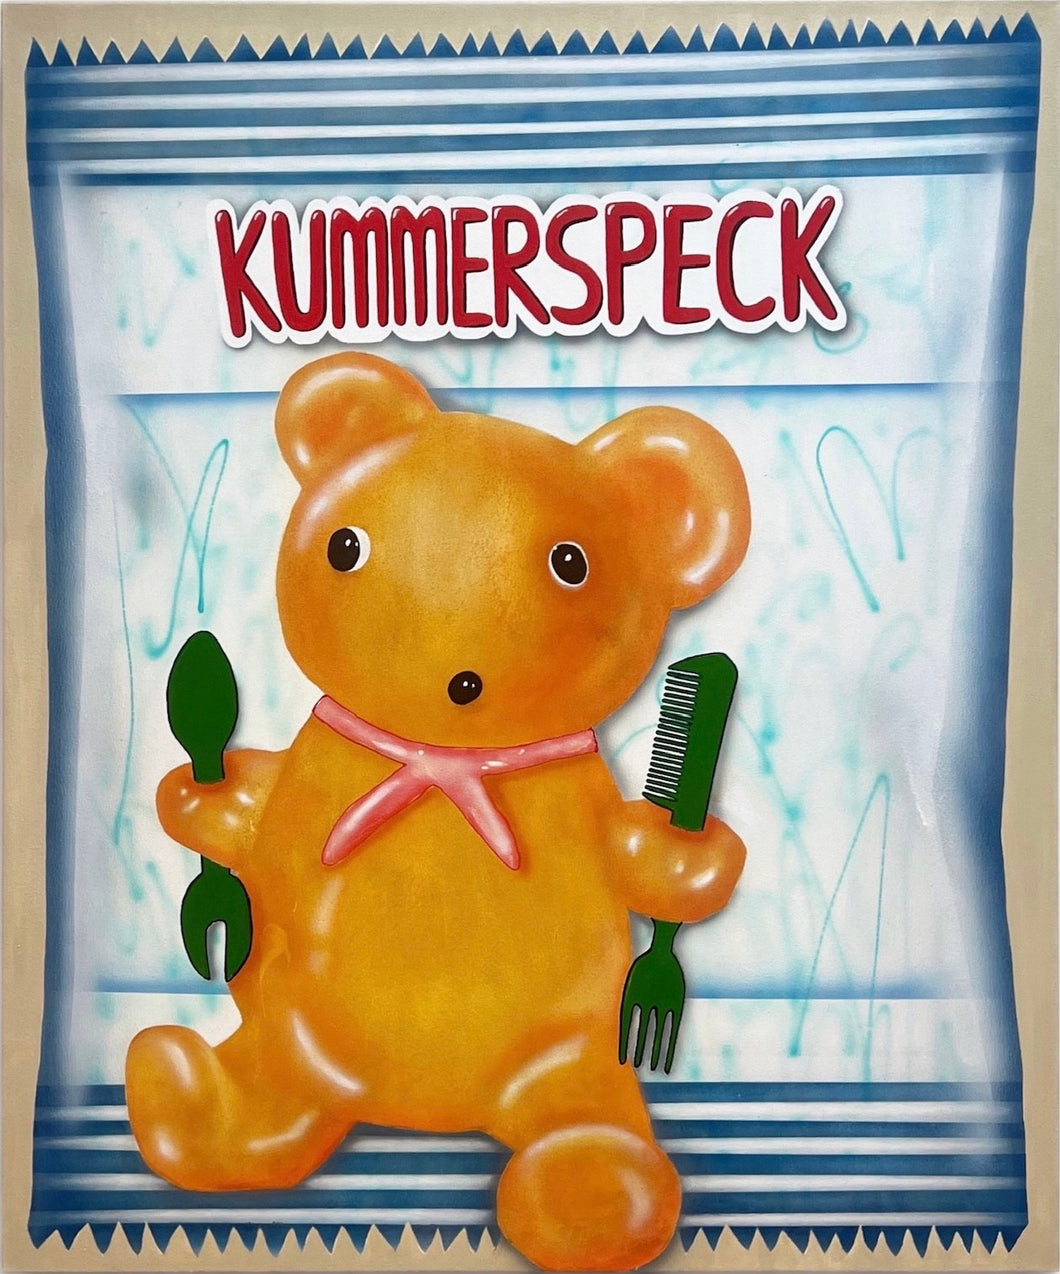 Kummerspeck (Bacon)